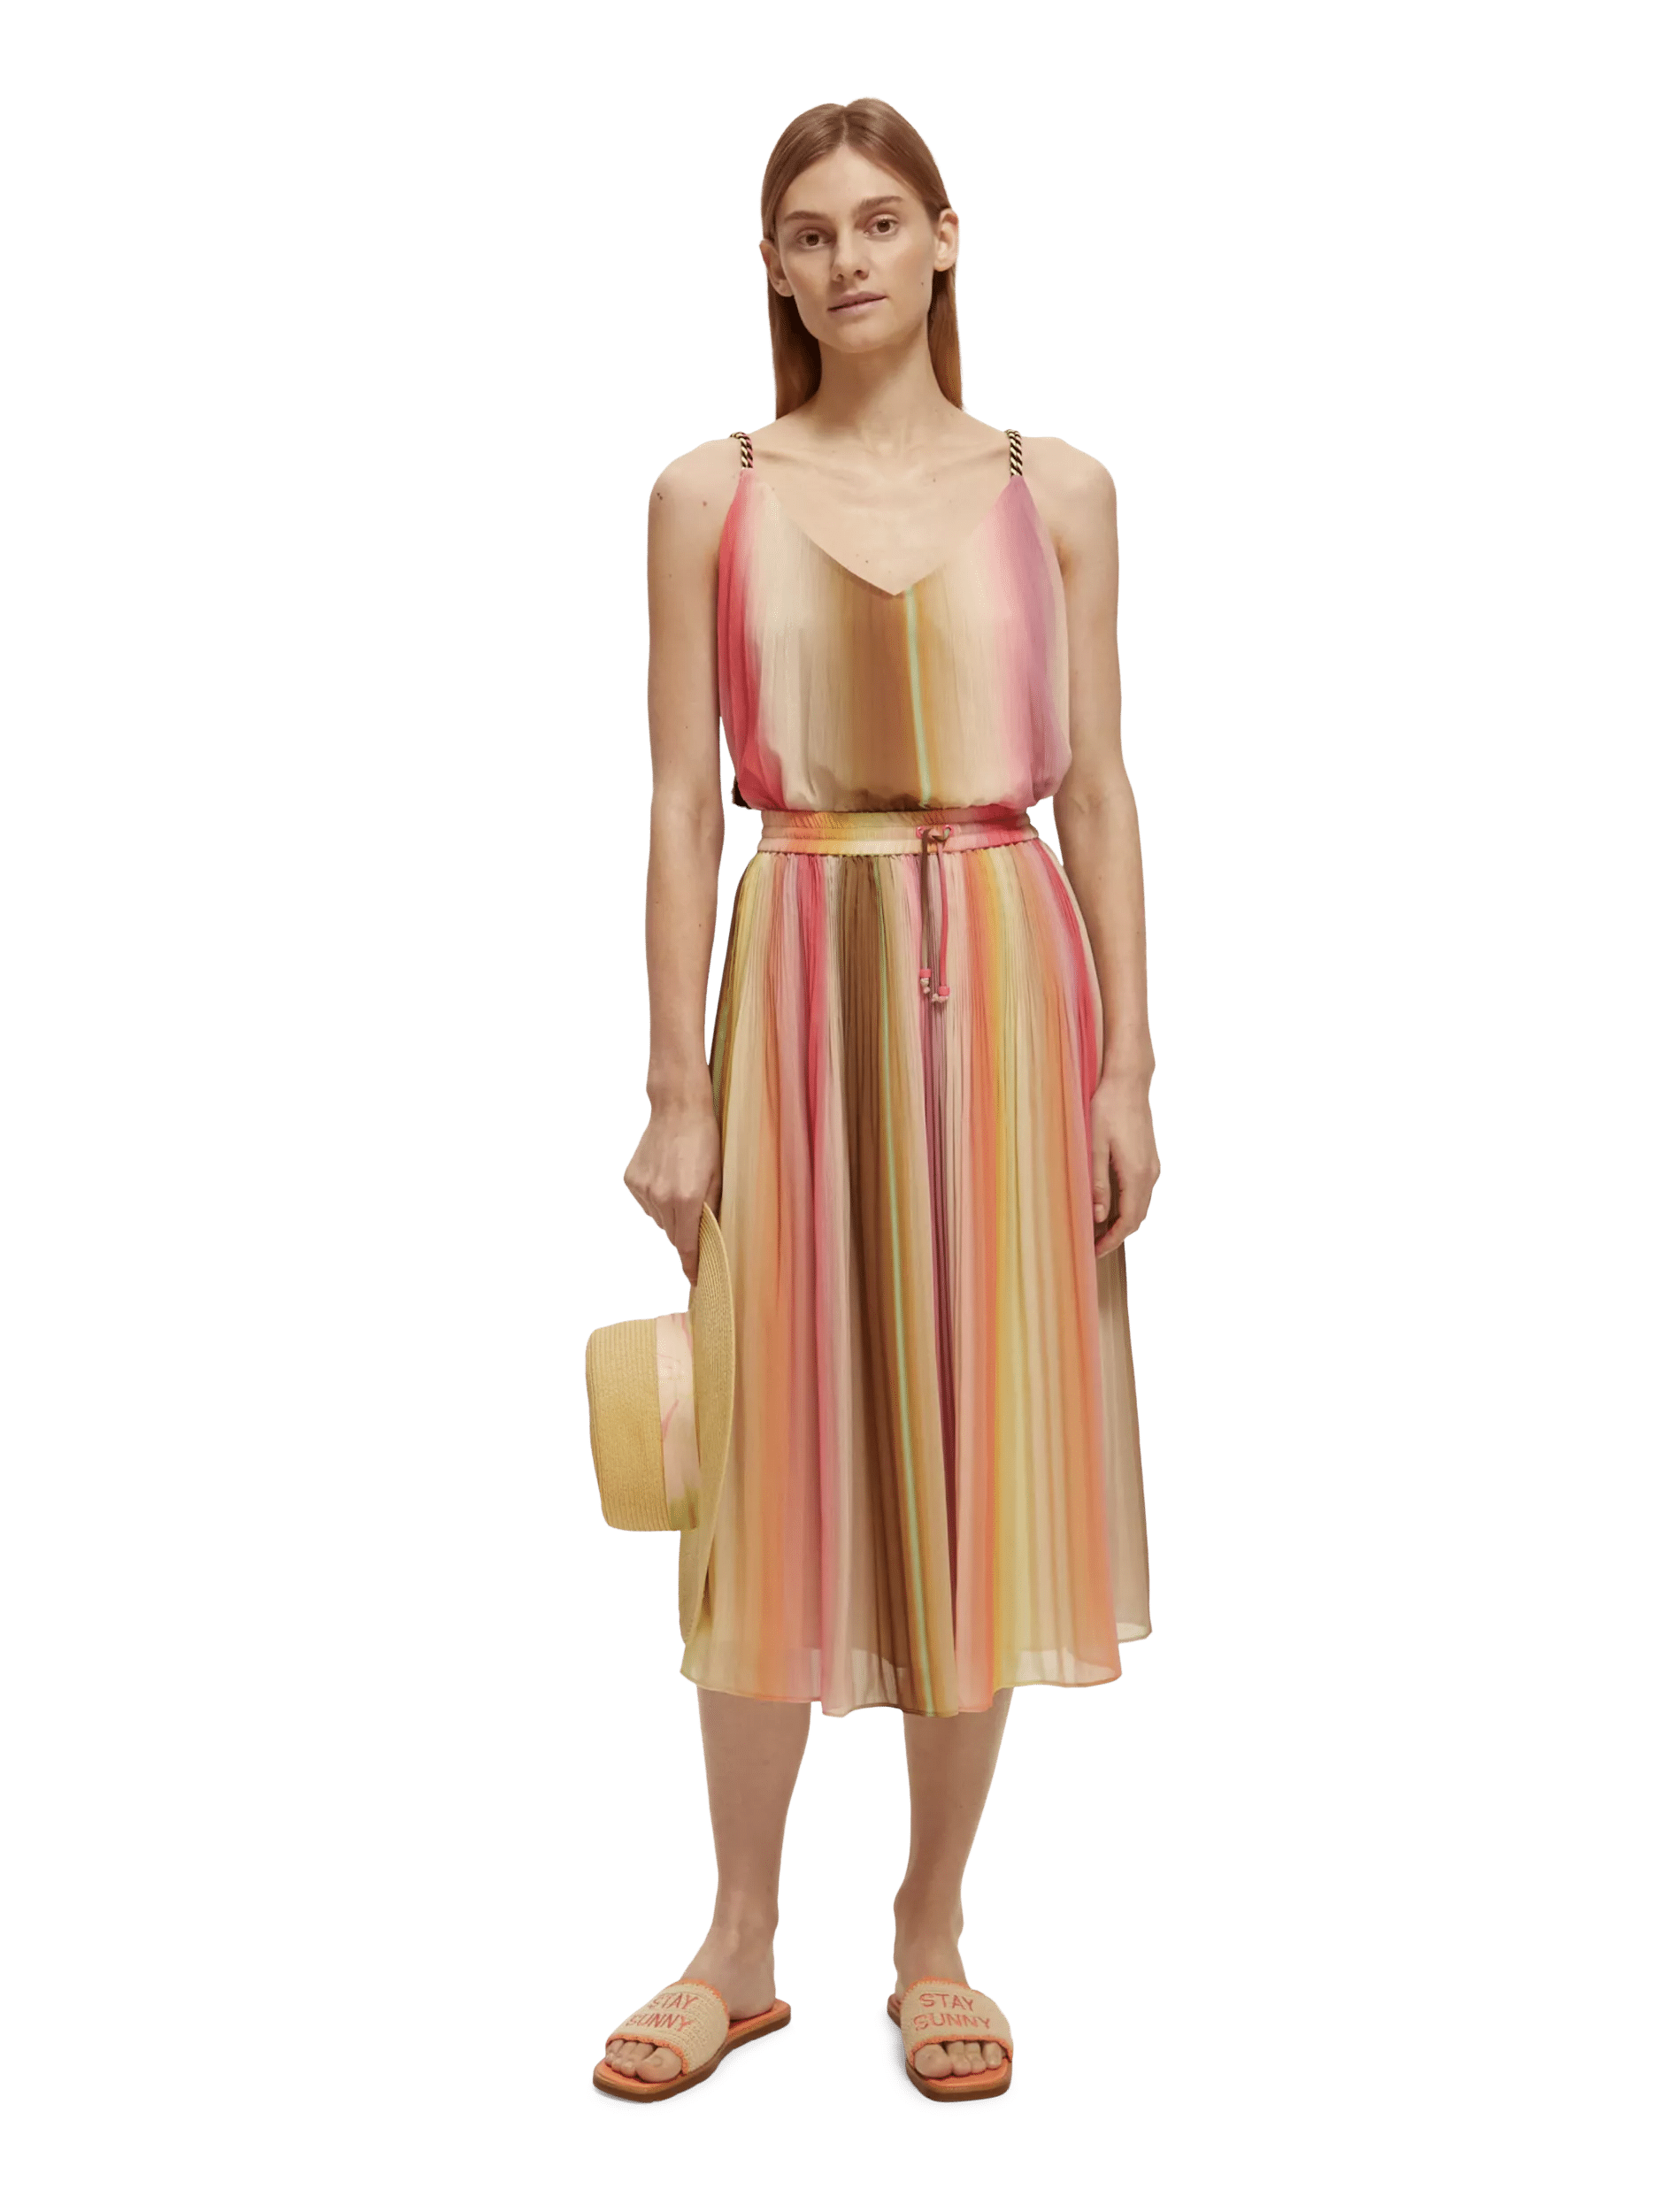 Maison Scotch - Pleated Midi Skirt - Rainbow Ombre